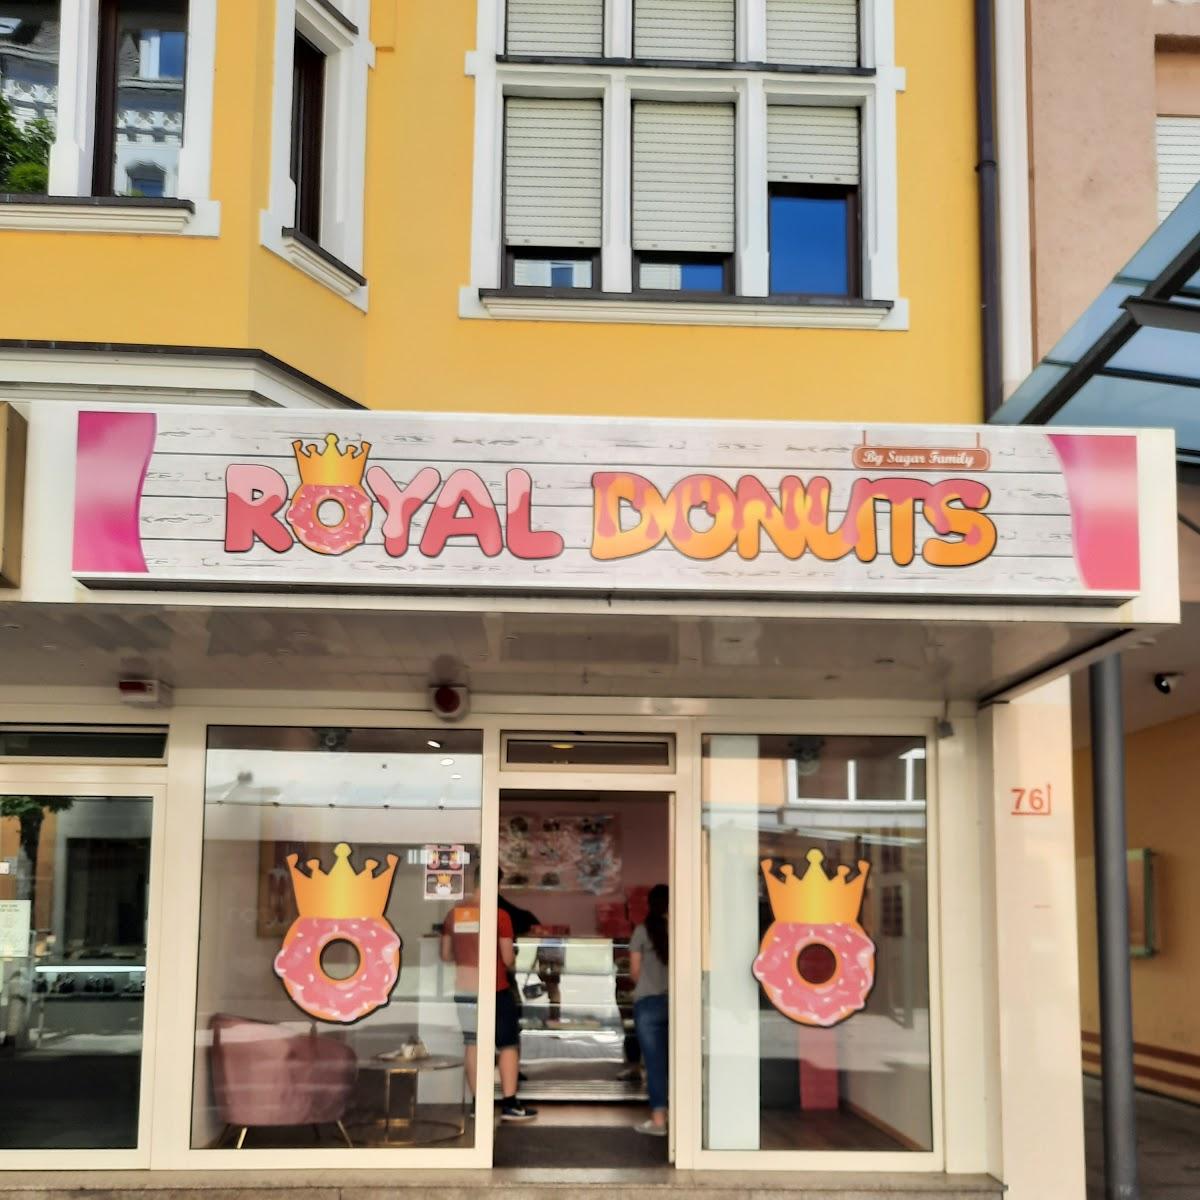 Restaurant "Royal Donuts" in Neuwied